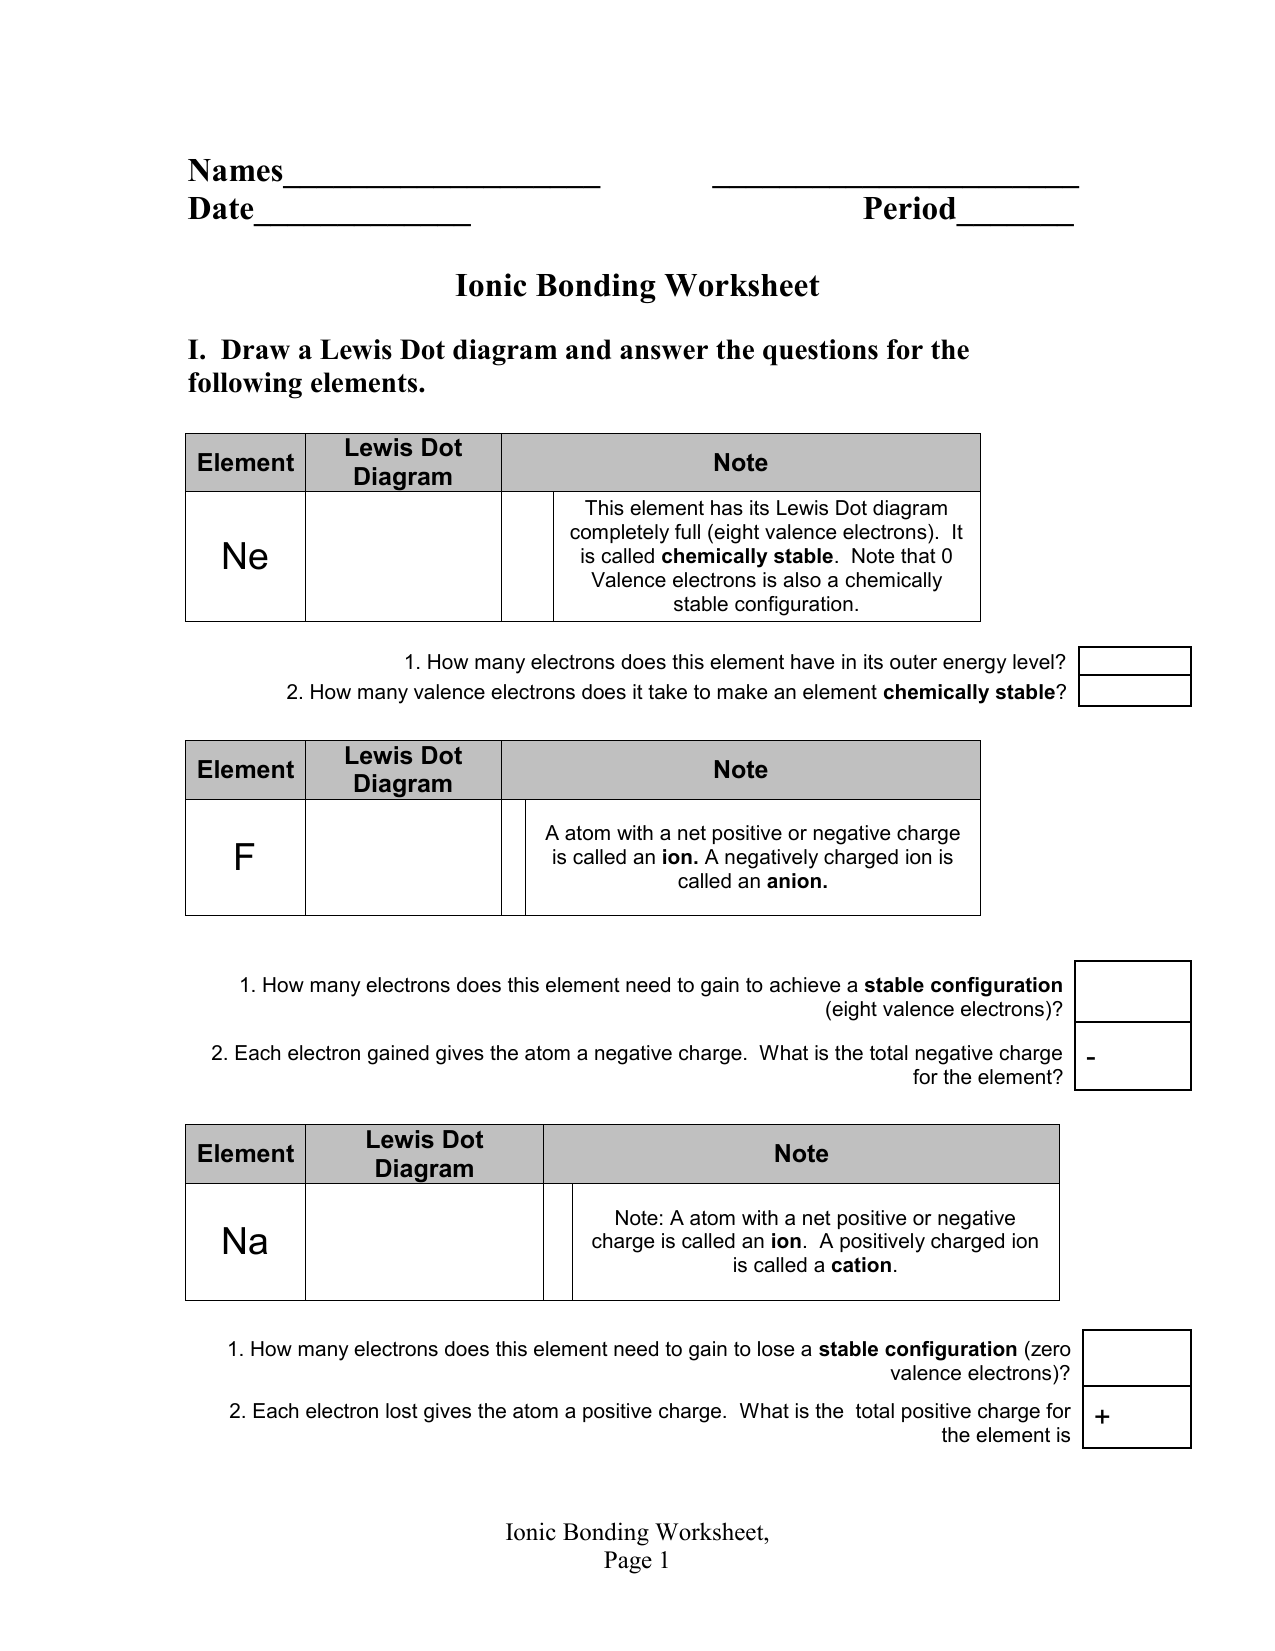 Ionic Bonding Worksheet With Ionic Bonding Worksheet Key